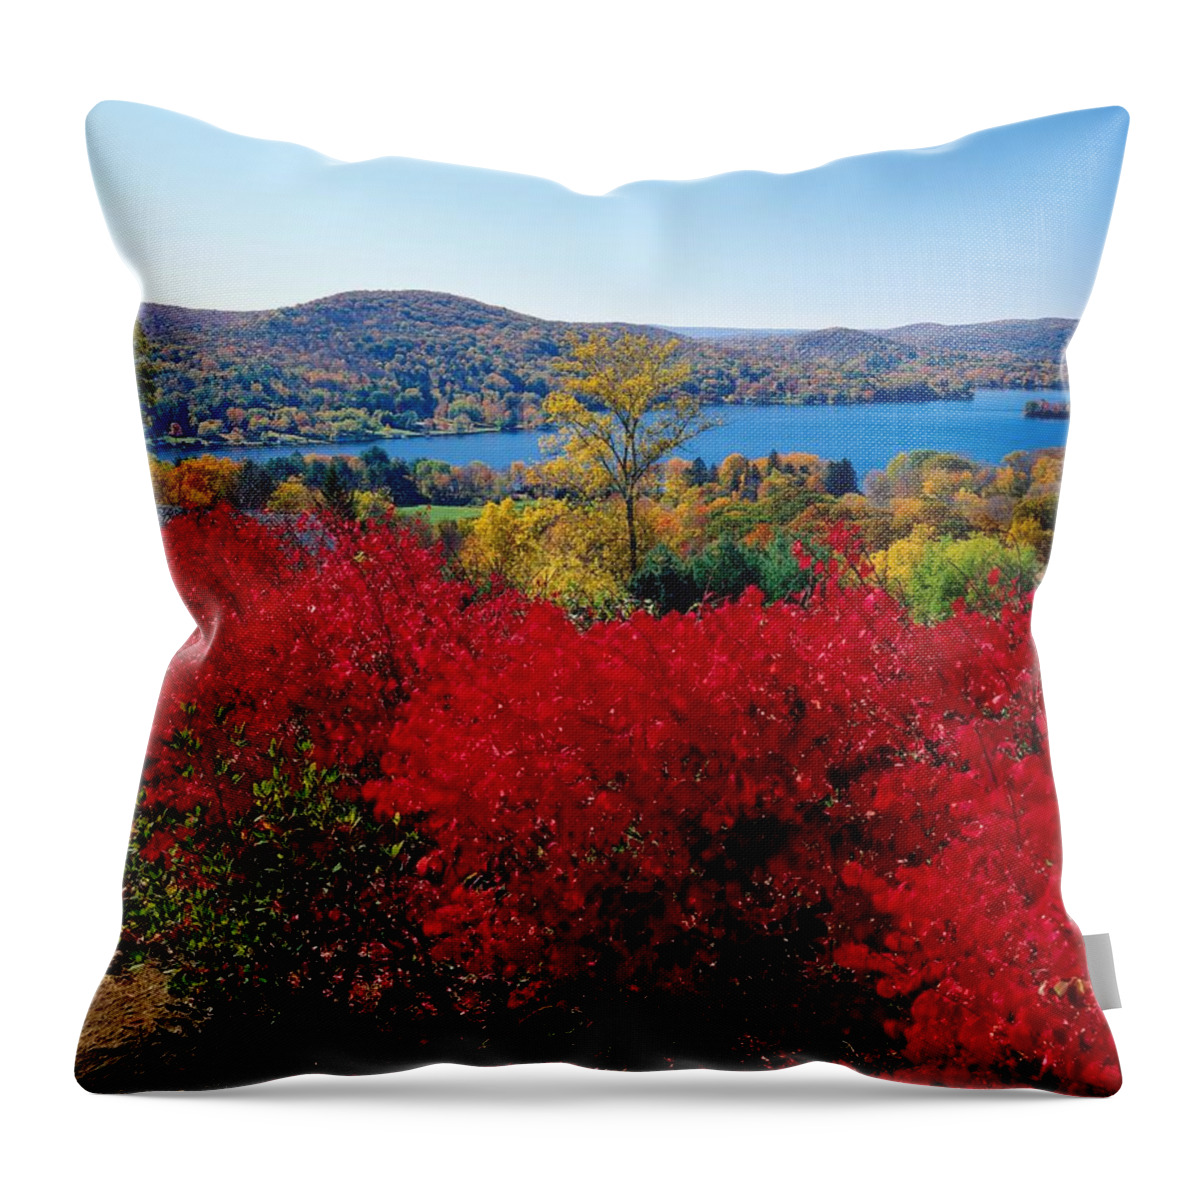 Estock Throw Pillow featuring the digital art Autumn Trees & Lake by Gunter Grafenhain